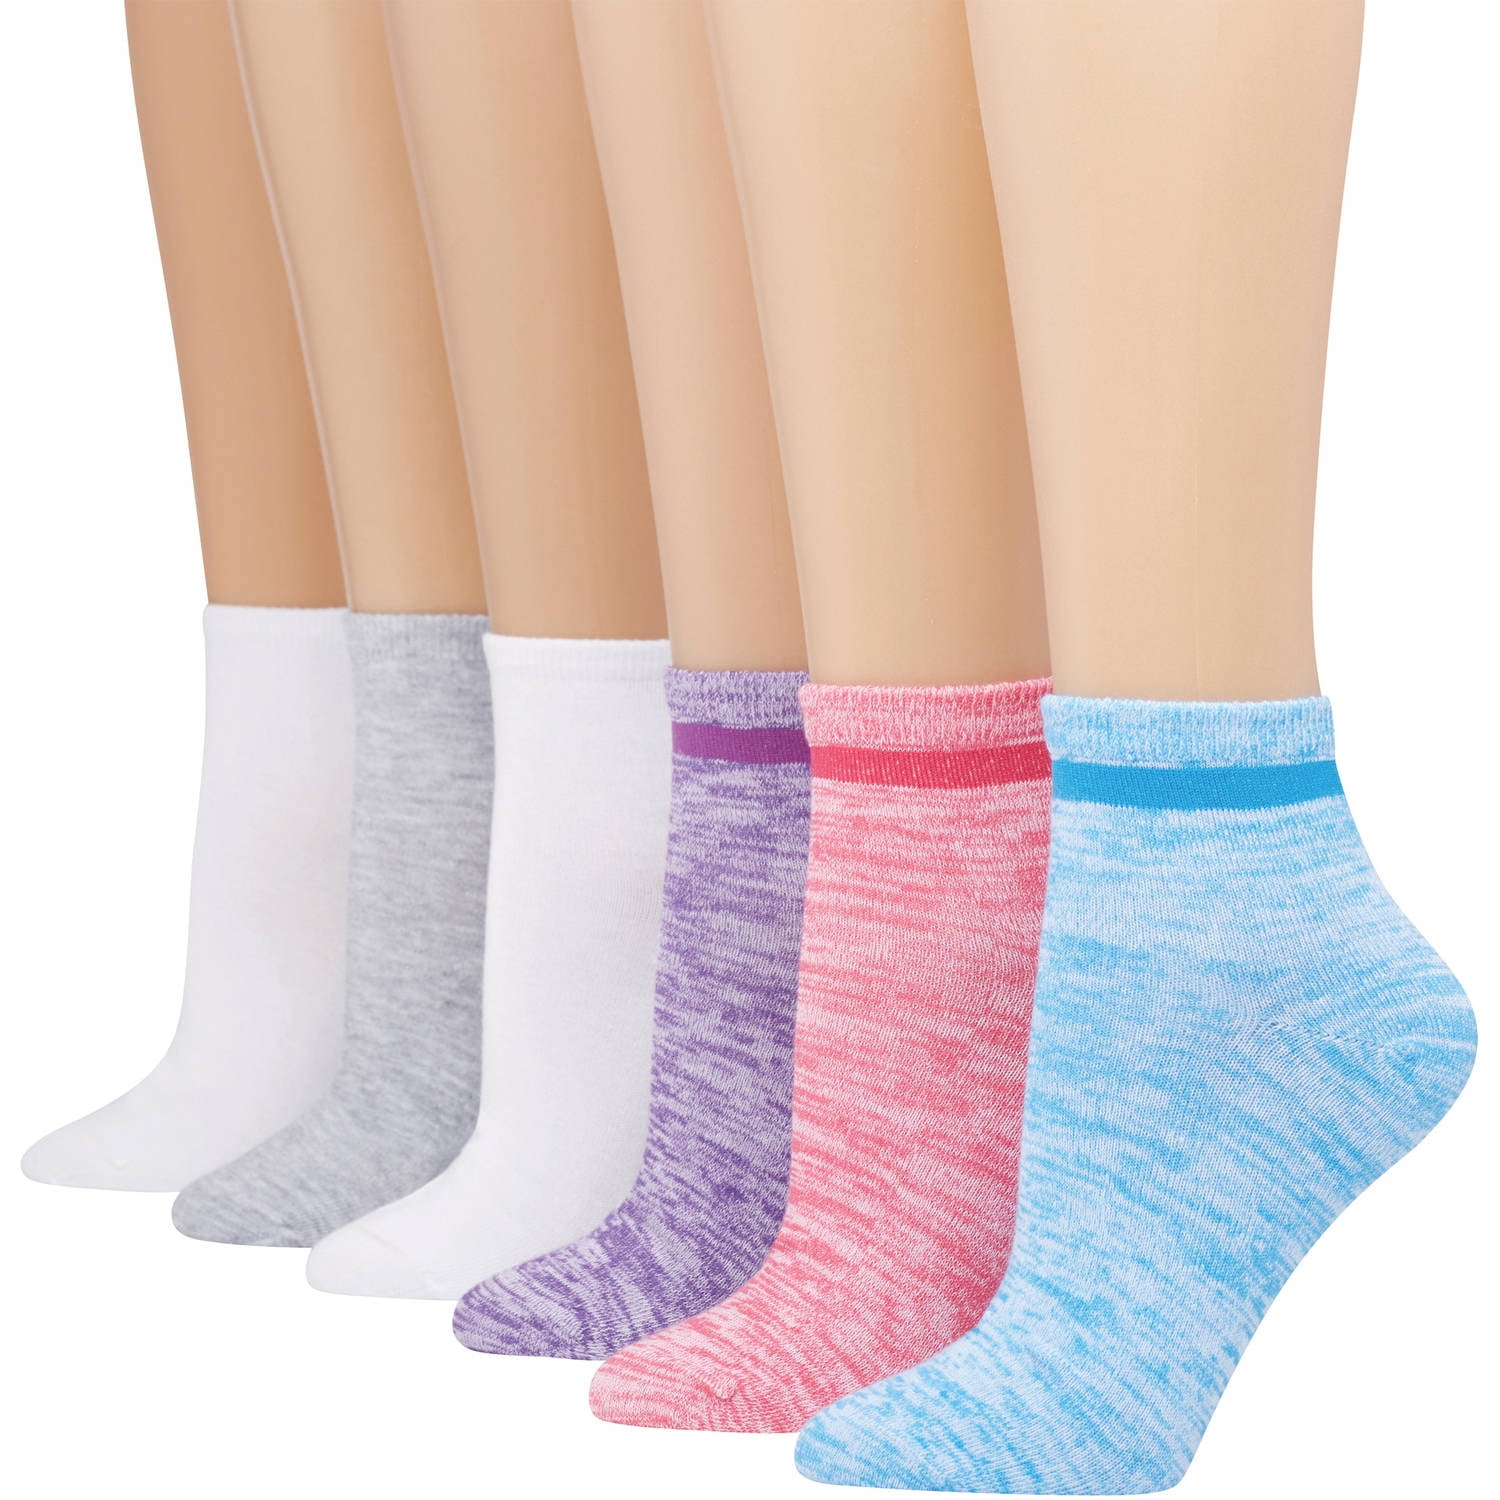 Women's Comfortblend Lightweight Ankle Socks, 6 pack